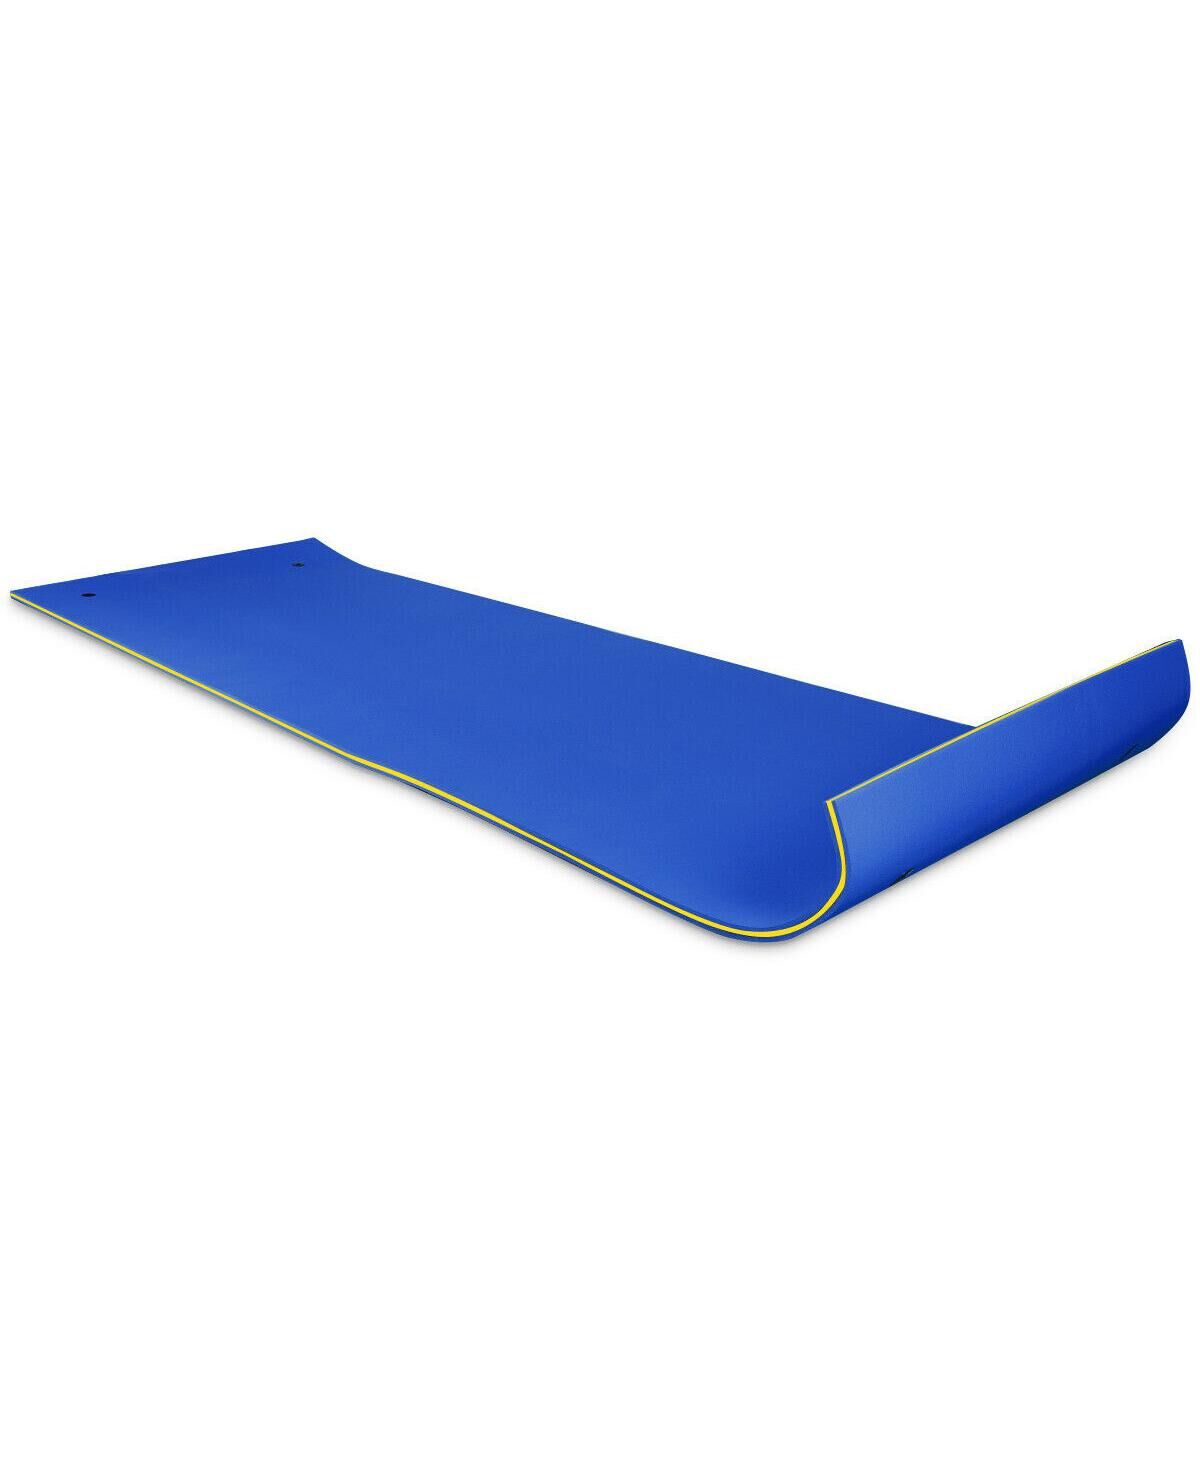 Costway 3 Layer Floating Water Pad Foam Mat Water Recreation Relaxing Tear-resistant 18' x 6' - Blue